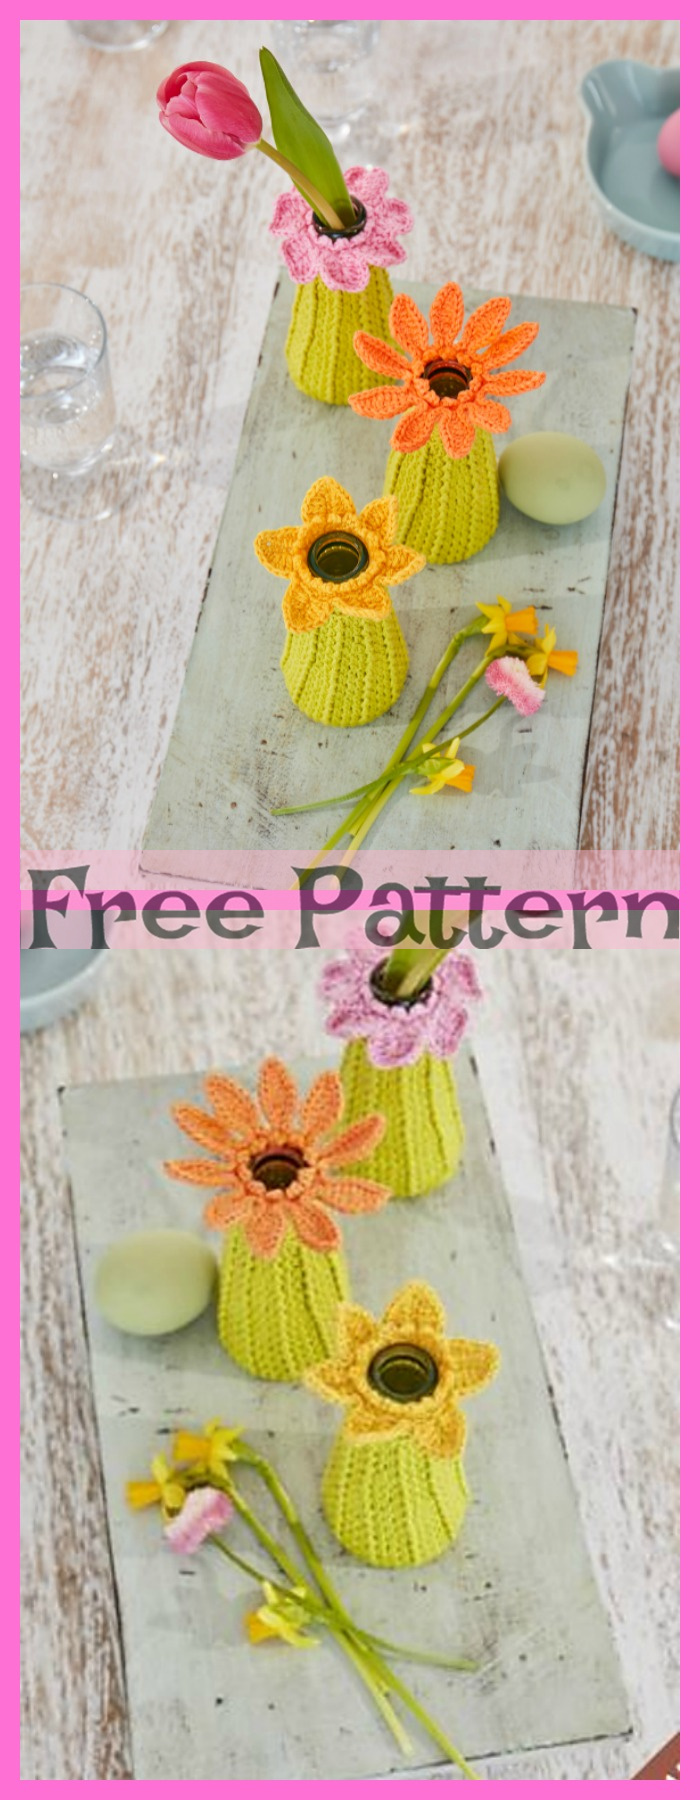 diy4ever-Crochet Vase Cozy Decoration - Free Patterns 